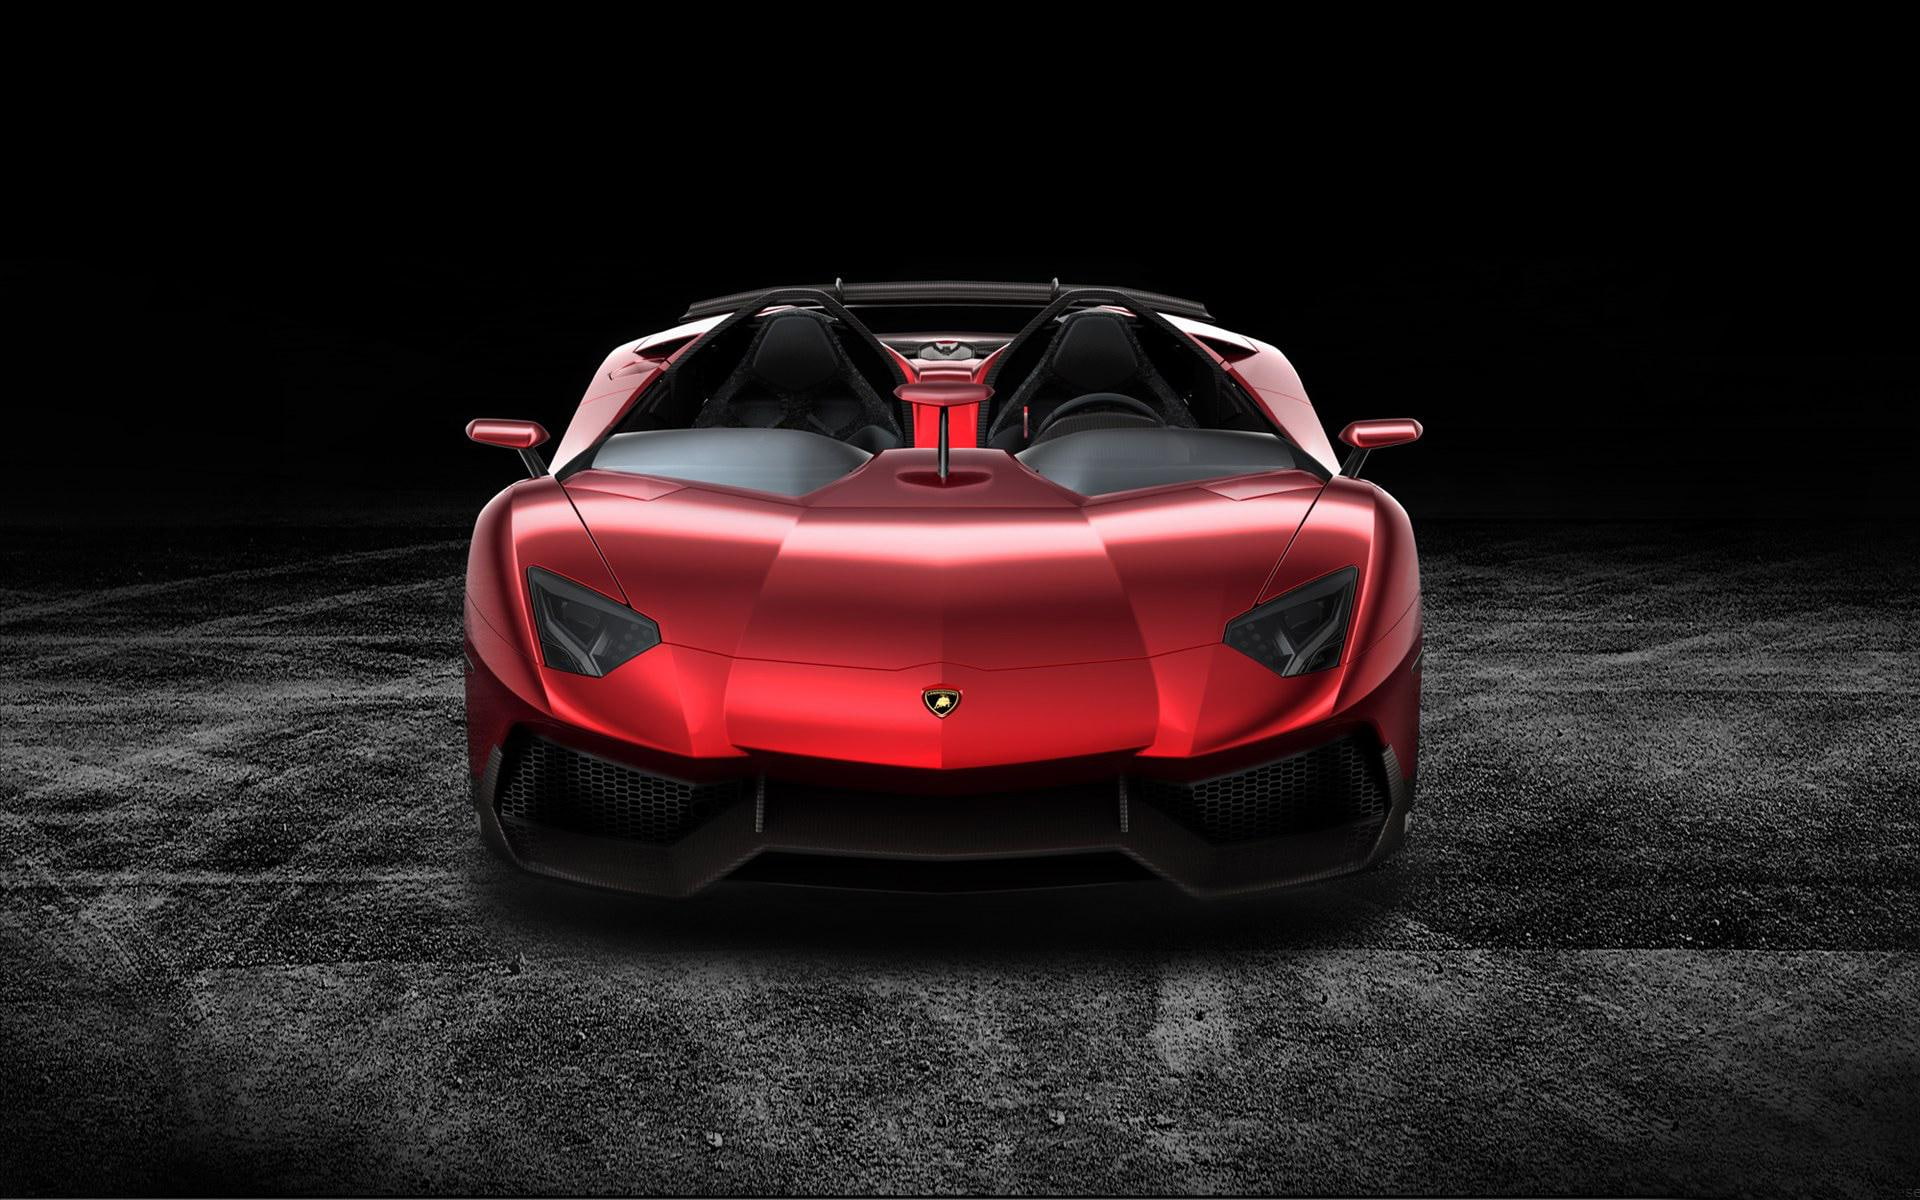 2012 Lamborghini Aventador J 2, red lamborghini aventador j, cars